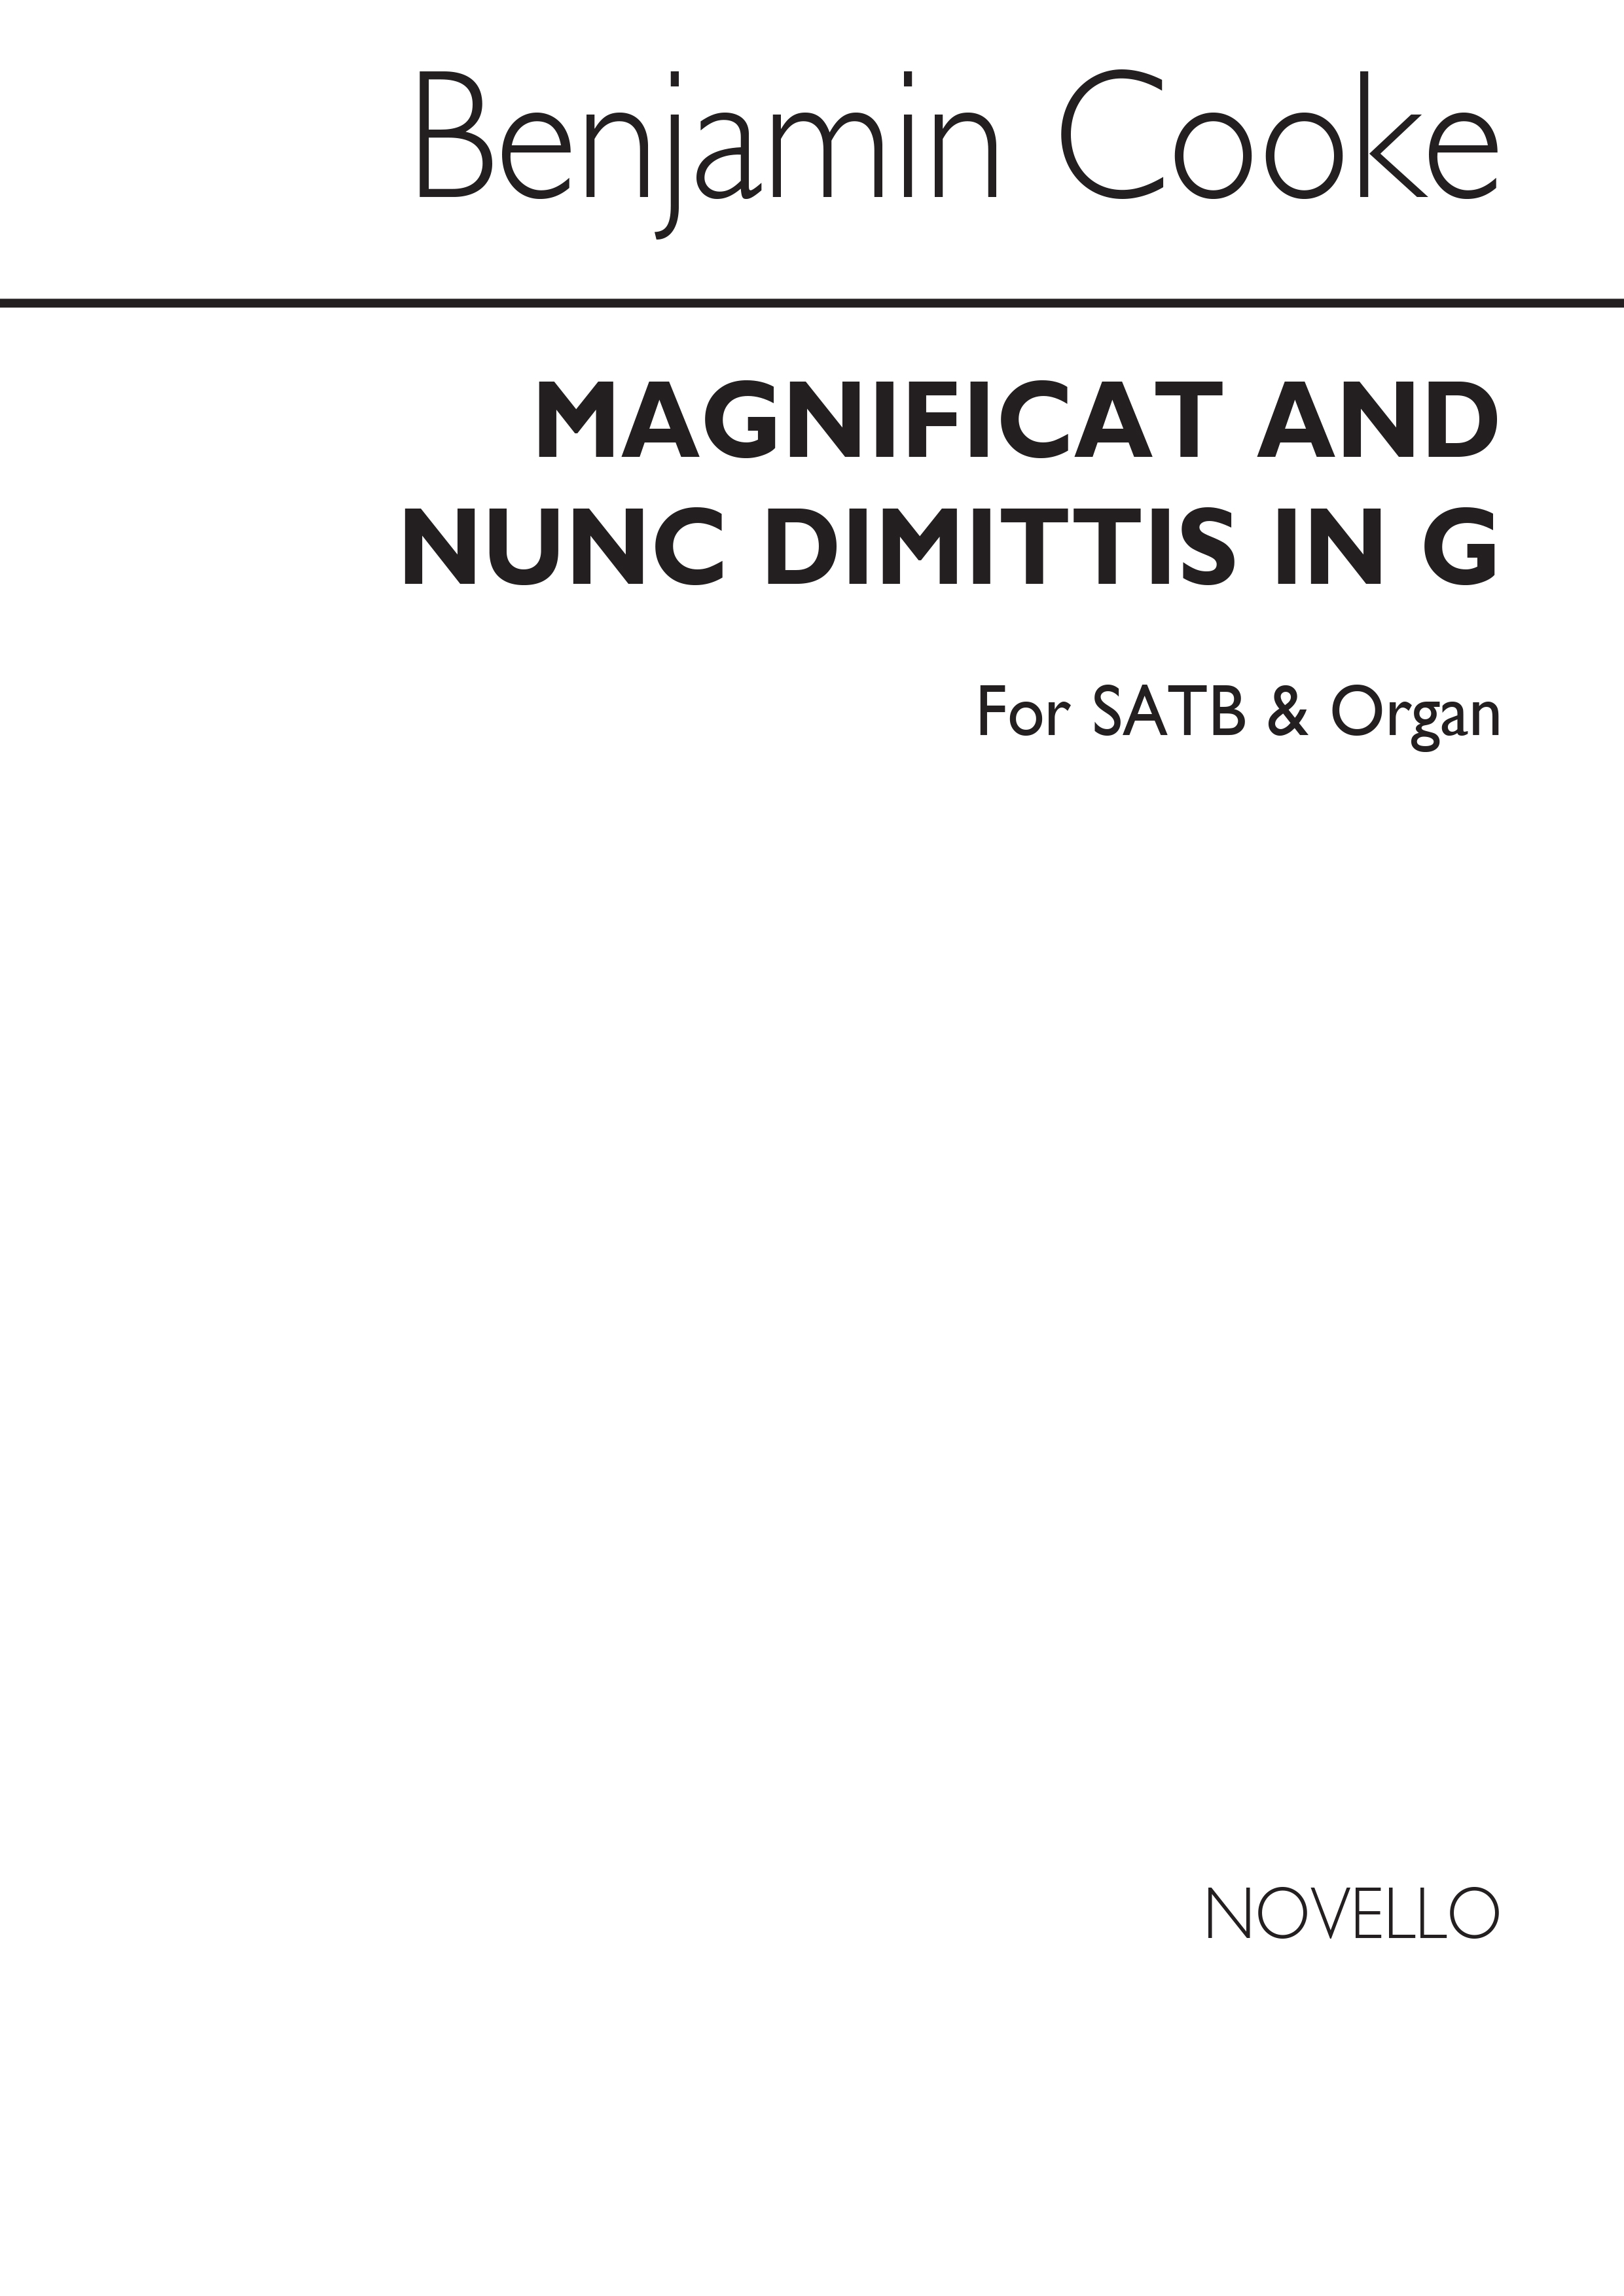 Dr. Benjamin Cooke: Magnificat And Nunc Dimittis In G